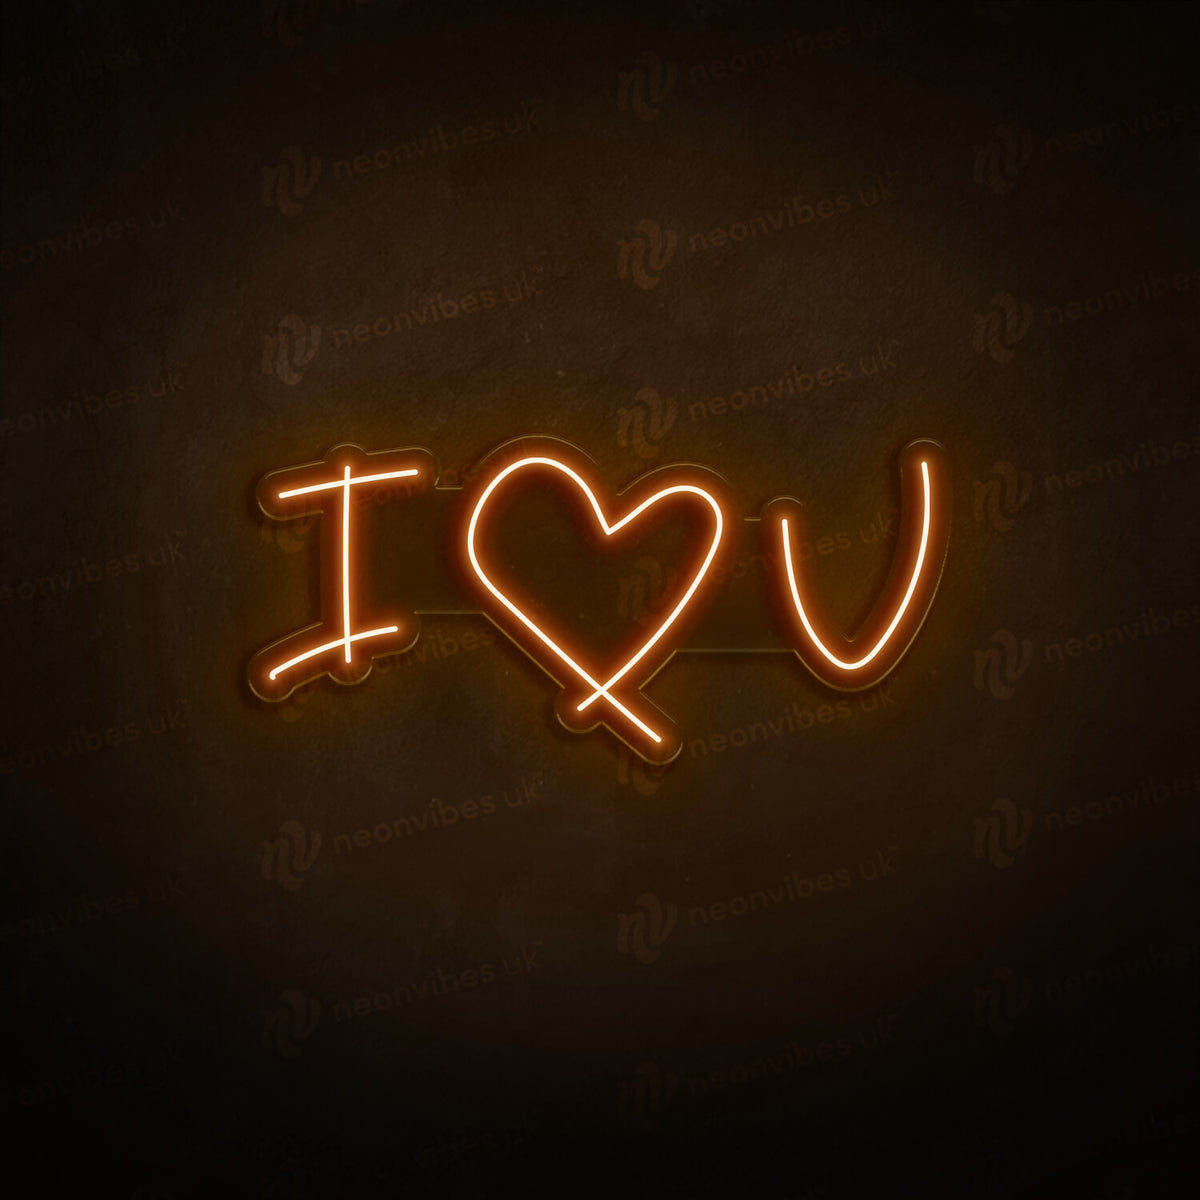 I Heart U neon sign